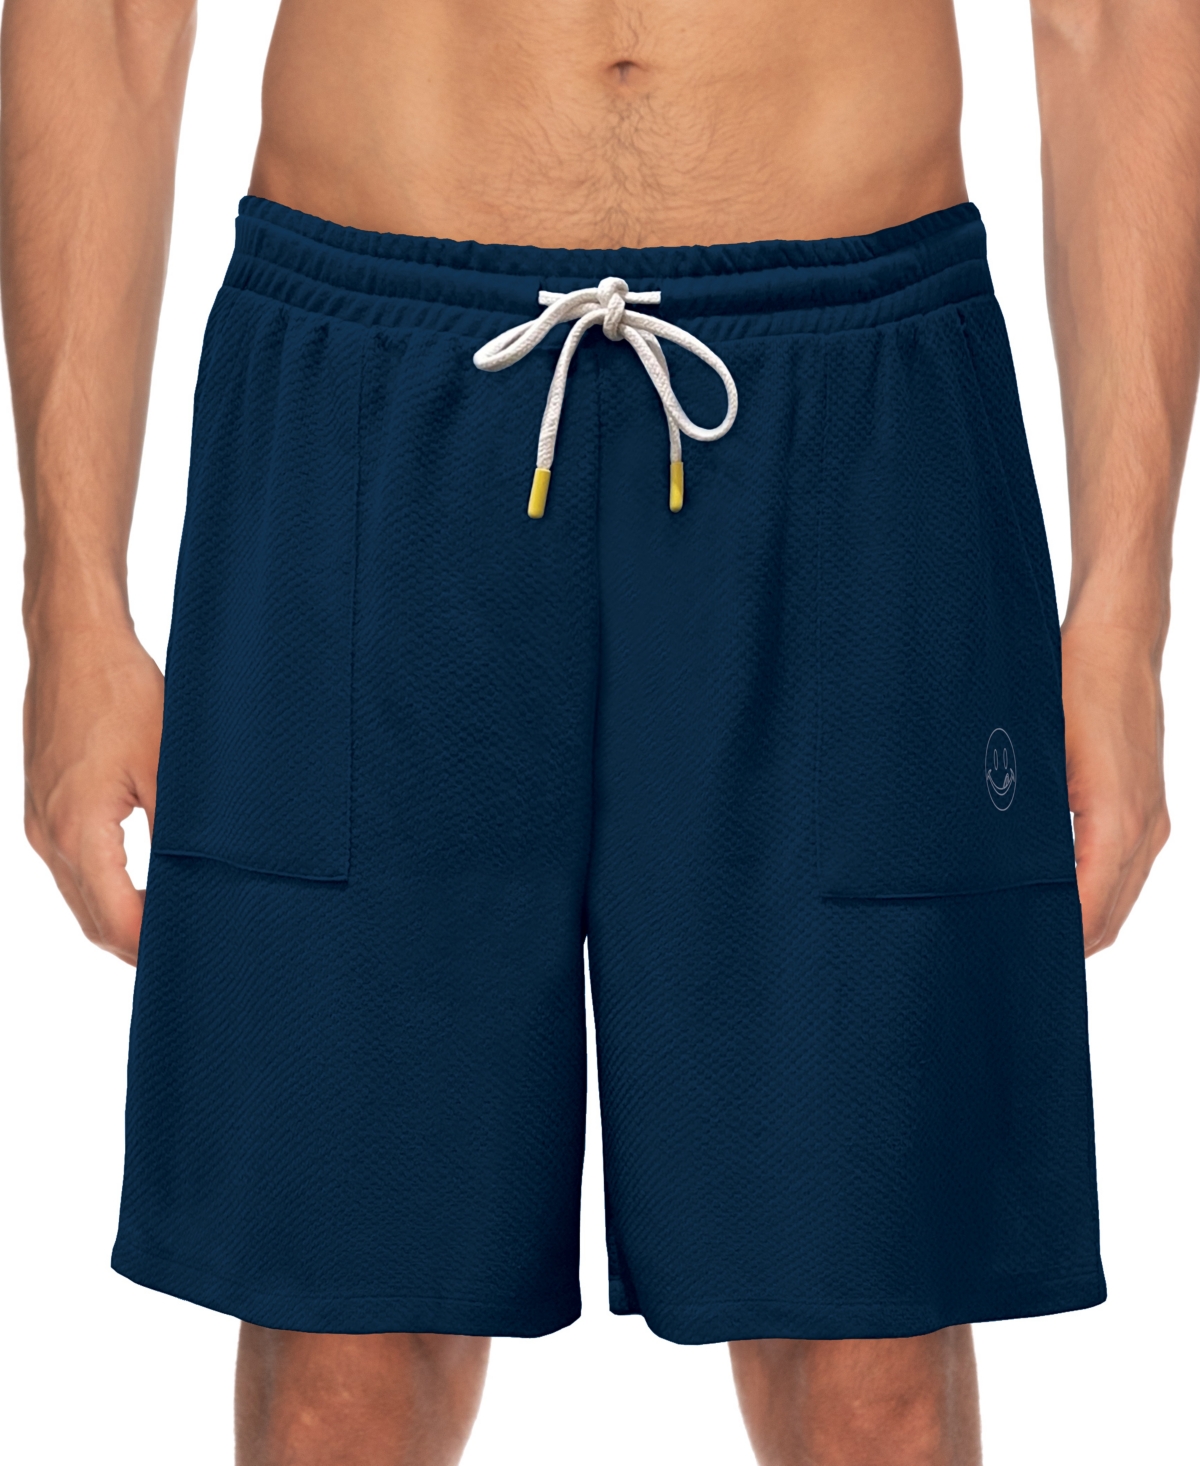 Men's Moisture Wicking Waffle Shorts - Navy